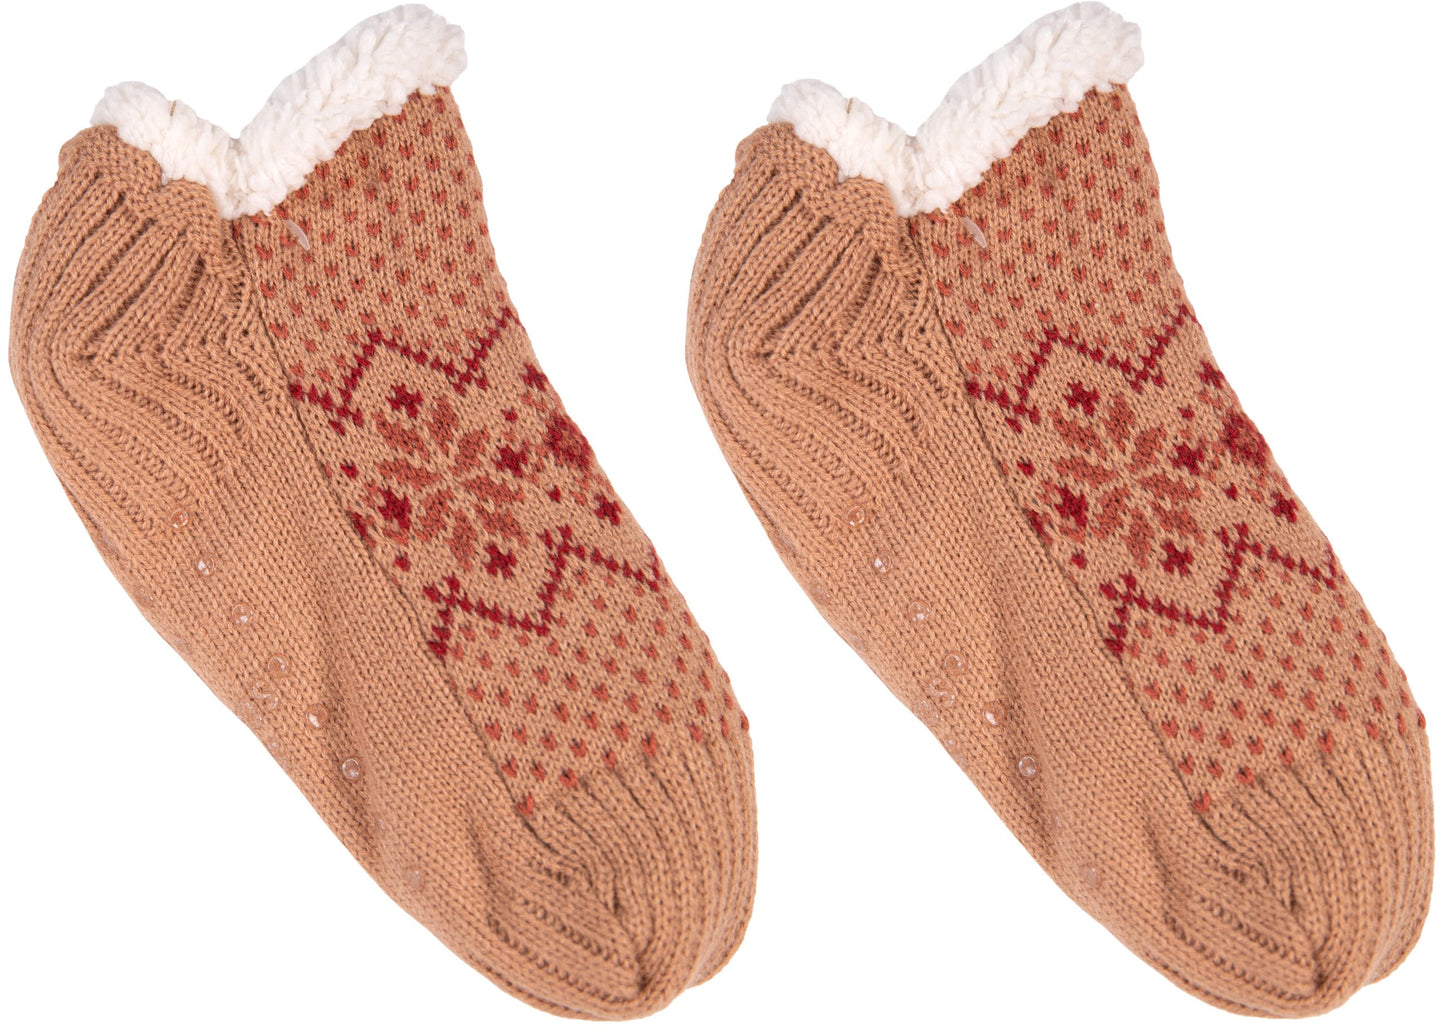 Sweater Camper Socks